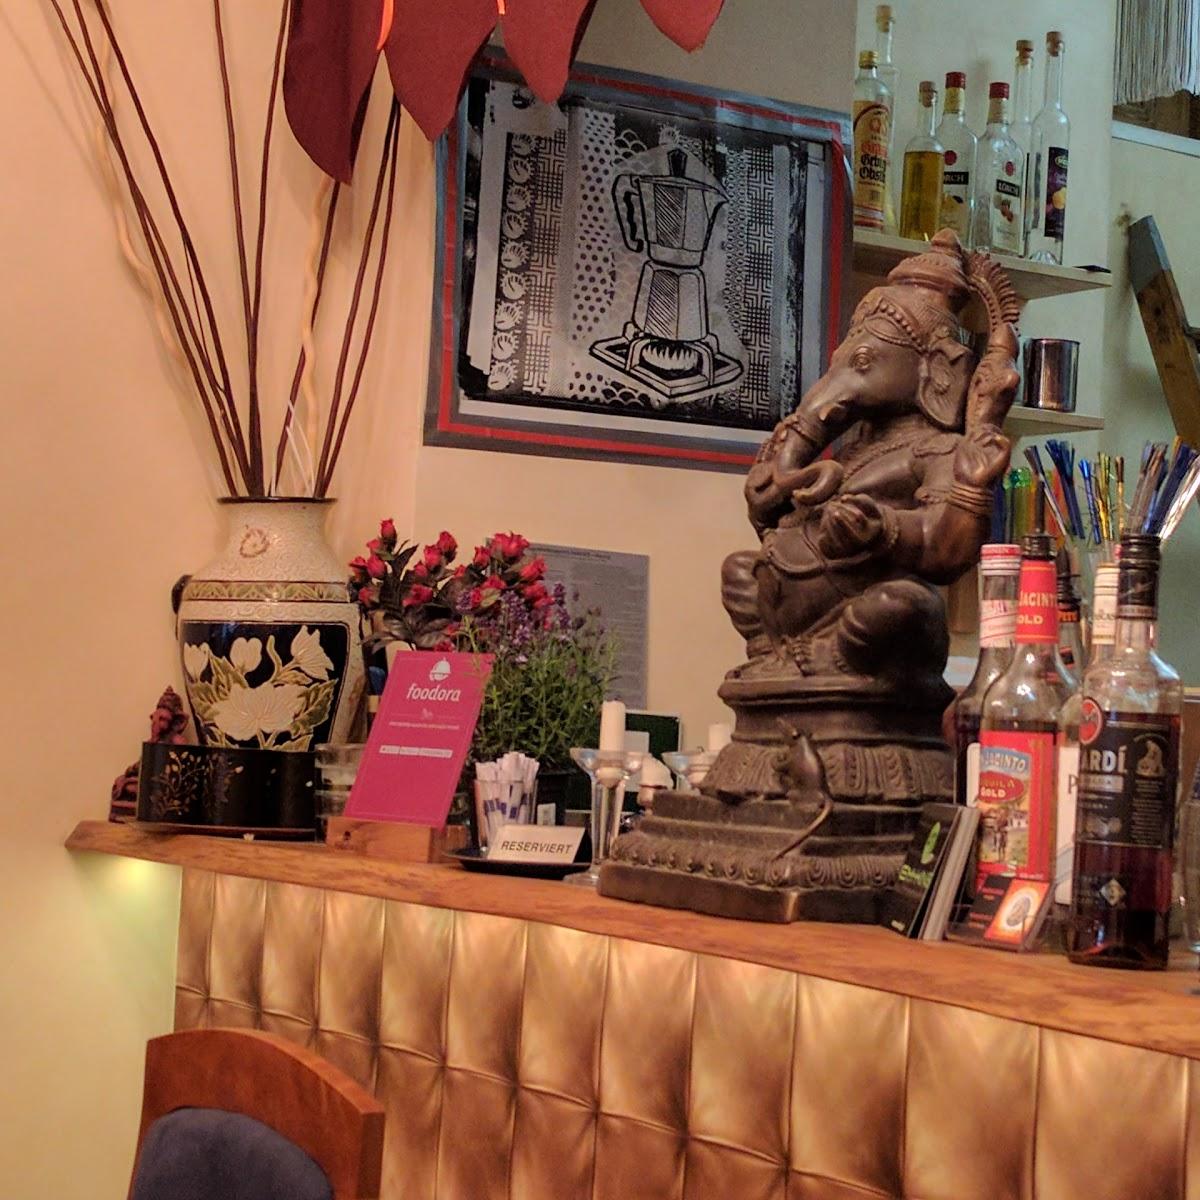 Restaurant "Happy Buddha" in Berlin